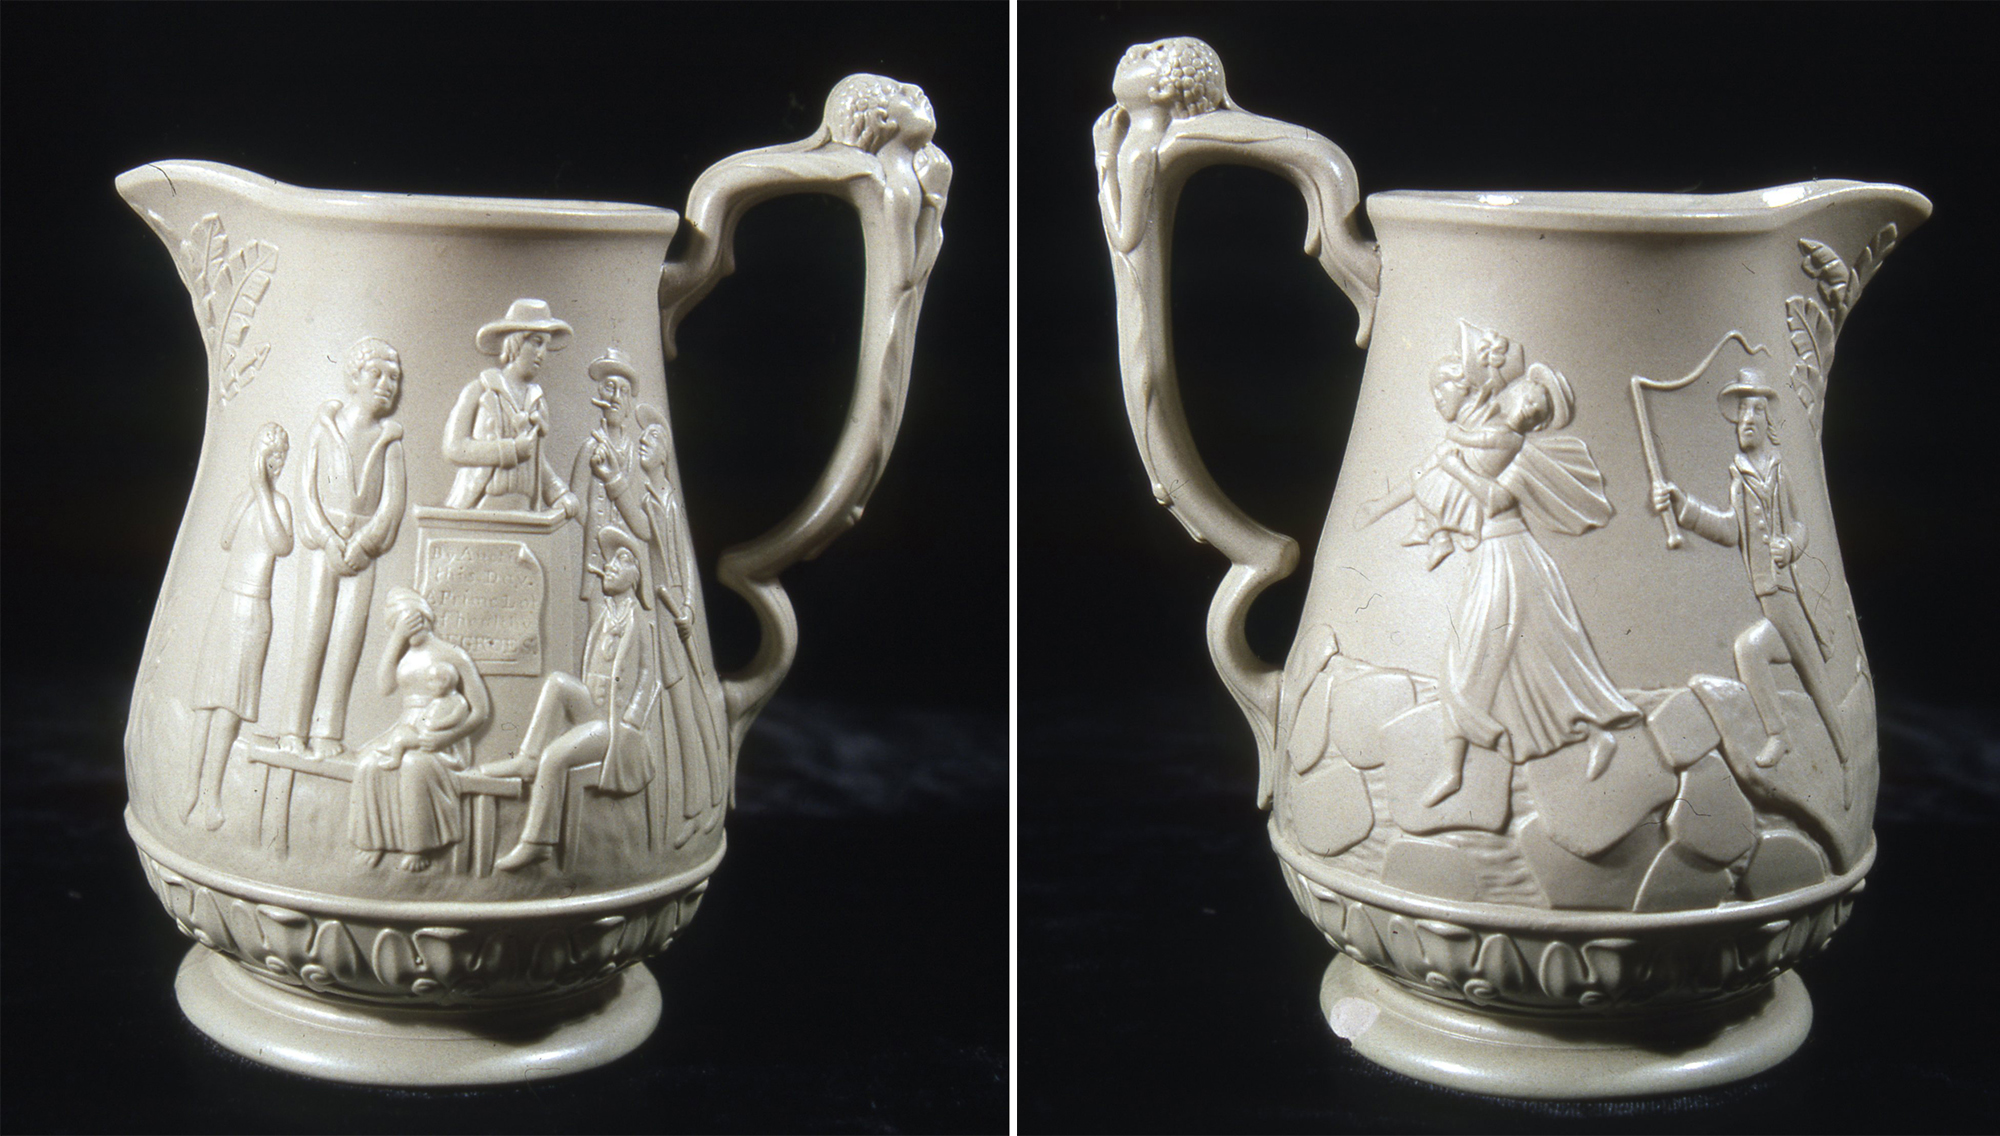 Anti-slavery pitcher, made by E. Ridgeway & Abington, Hanley, England, c. 1853. Gift of Julia A. Grimstad.